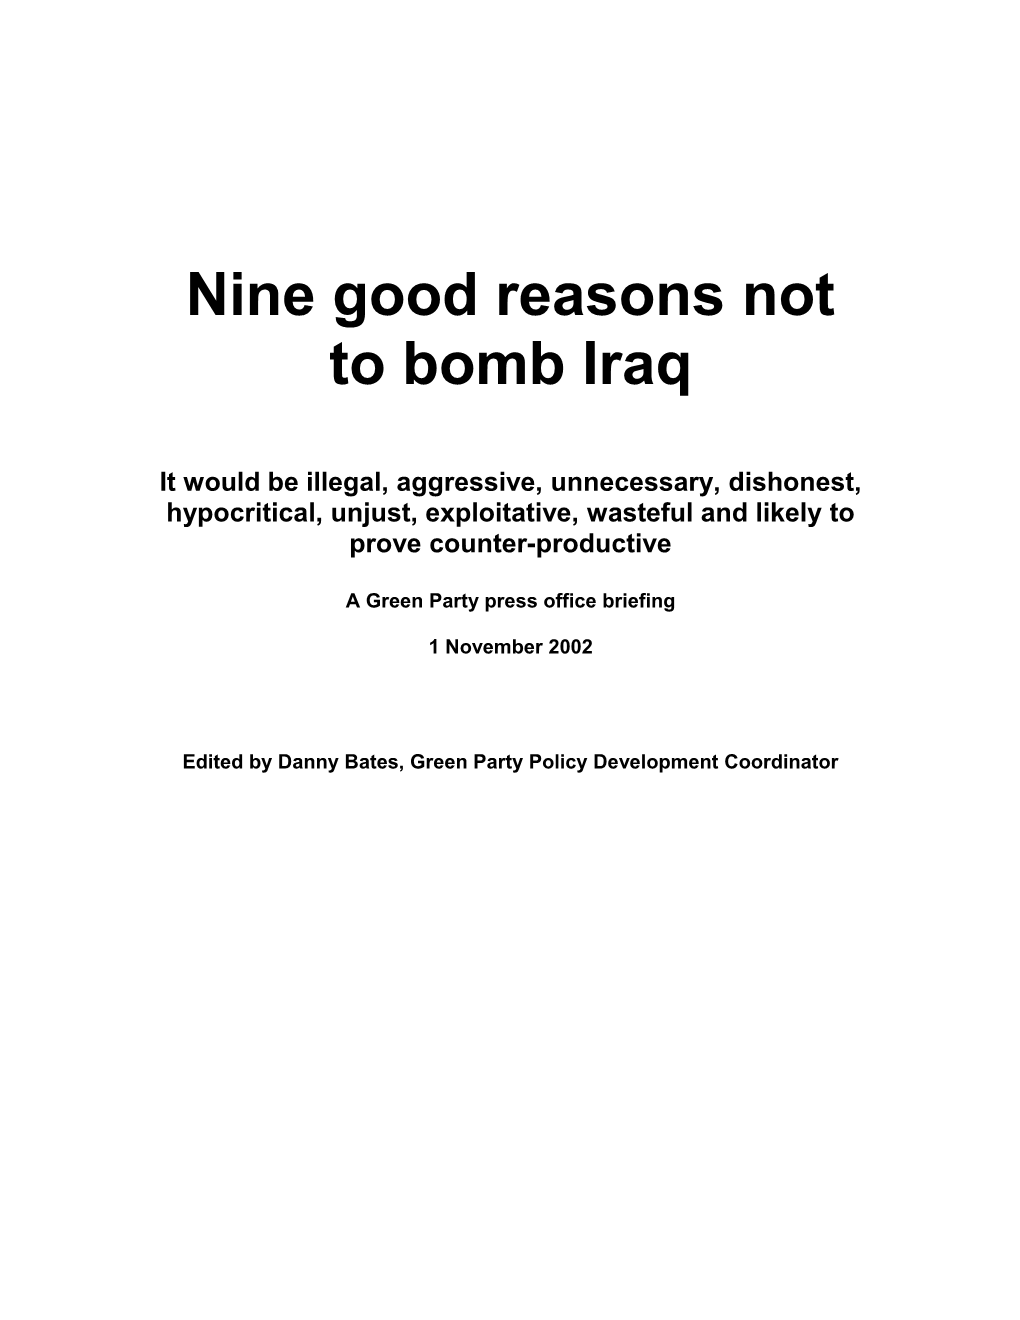 Nine Good Reasons Not to Bomb Iraq